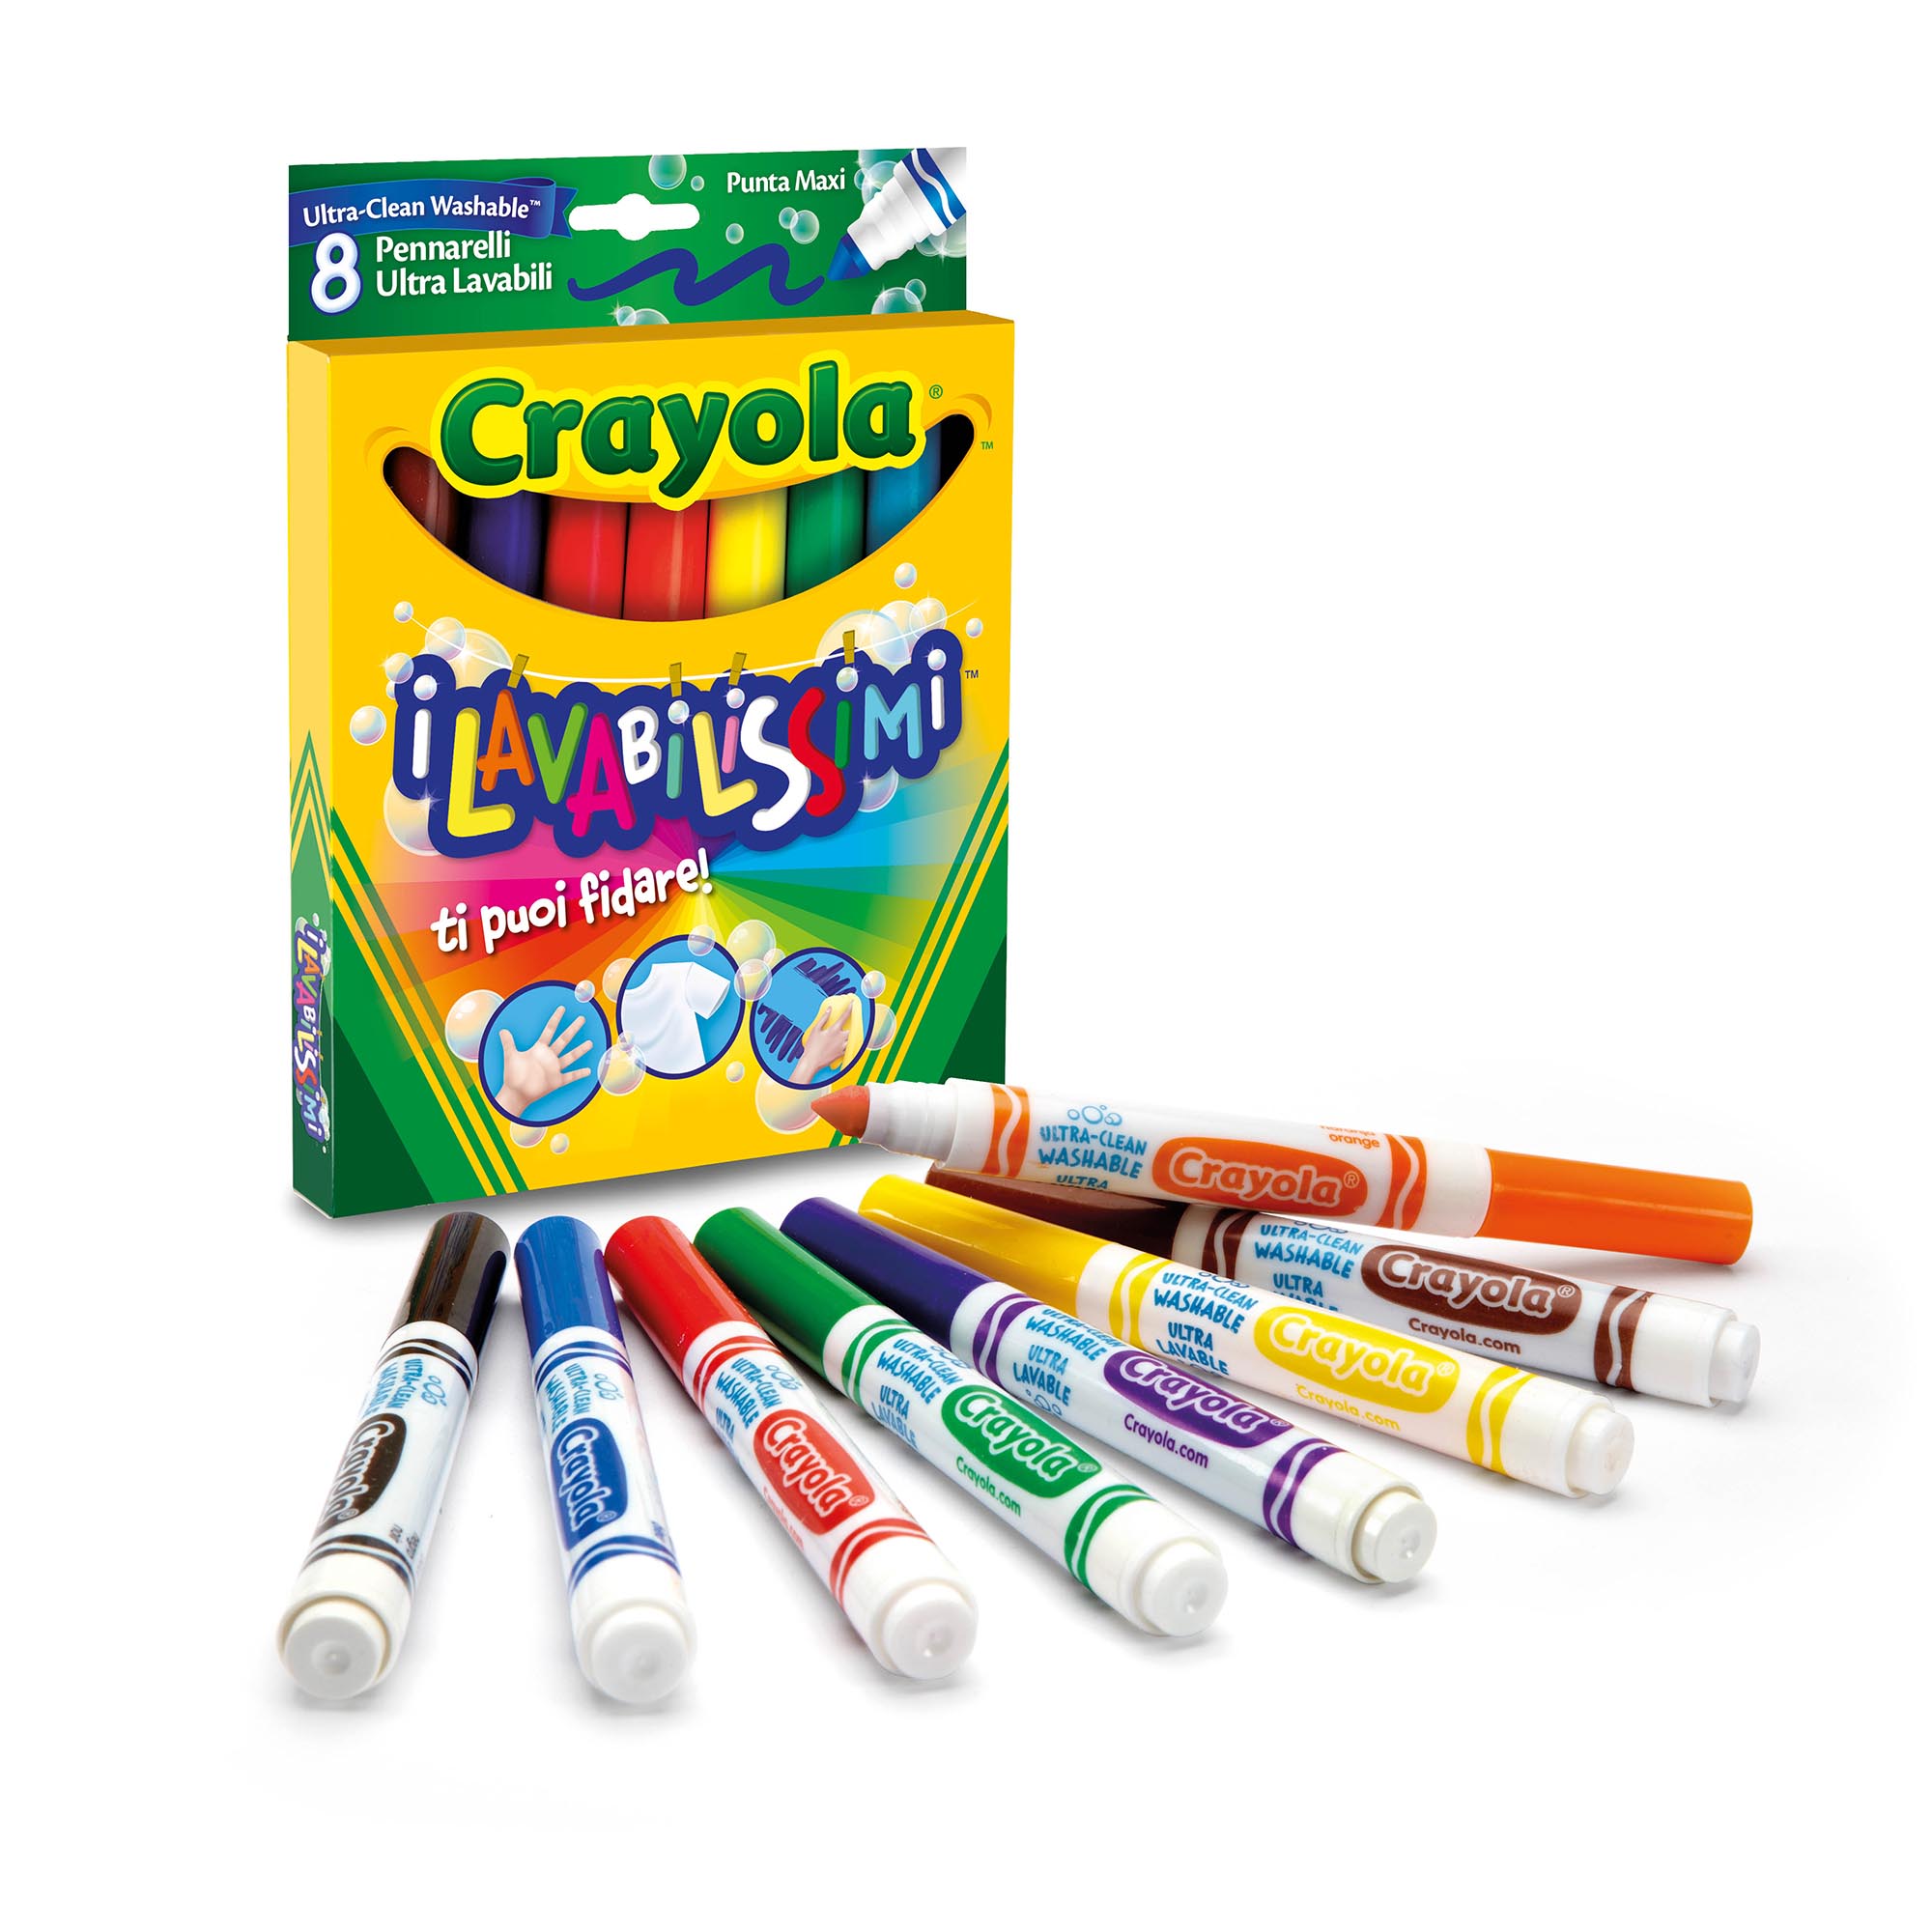 8 pennarelli maxi punta i lavabilissimi crayola - CRAYOLA